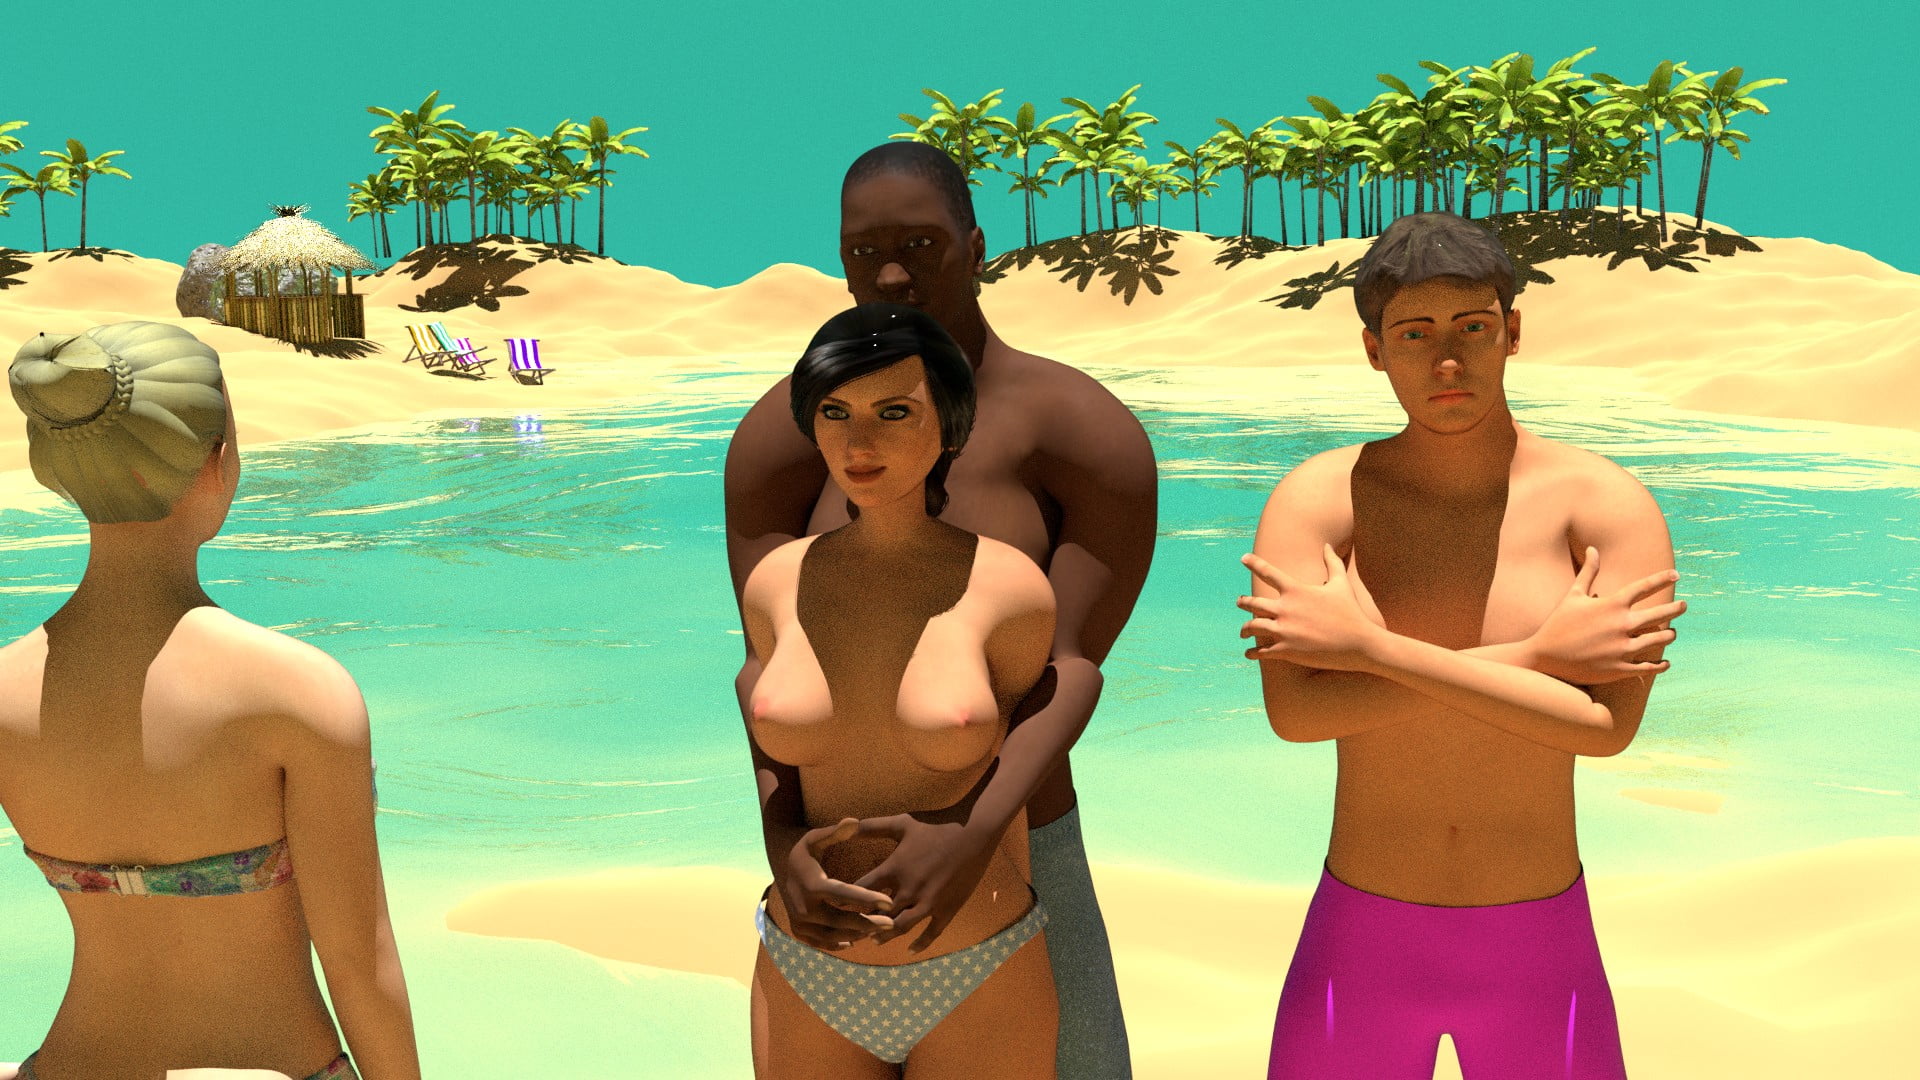 Desert Island Porn - Ren'Py] Deserted Island Dreams - v0.42 by DeDagames 18+ Adult xxx Porn Game  Download